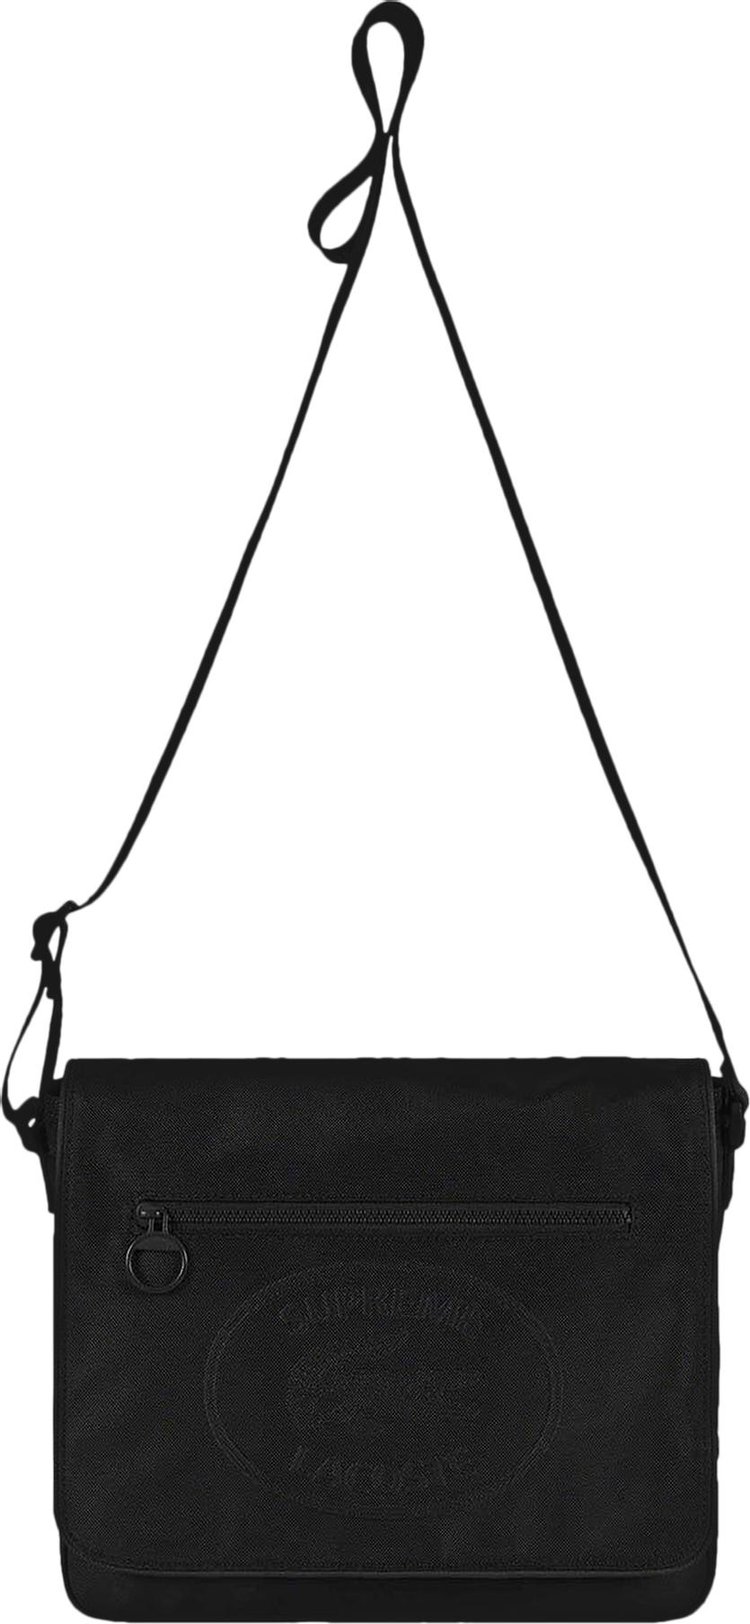 Buy Supreme x Small Messenger Bag 'Black' - FW19B14 BLACK |